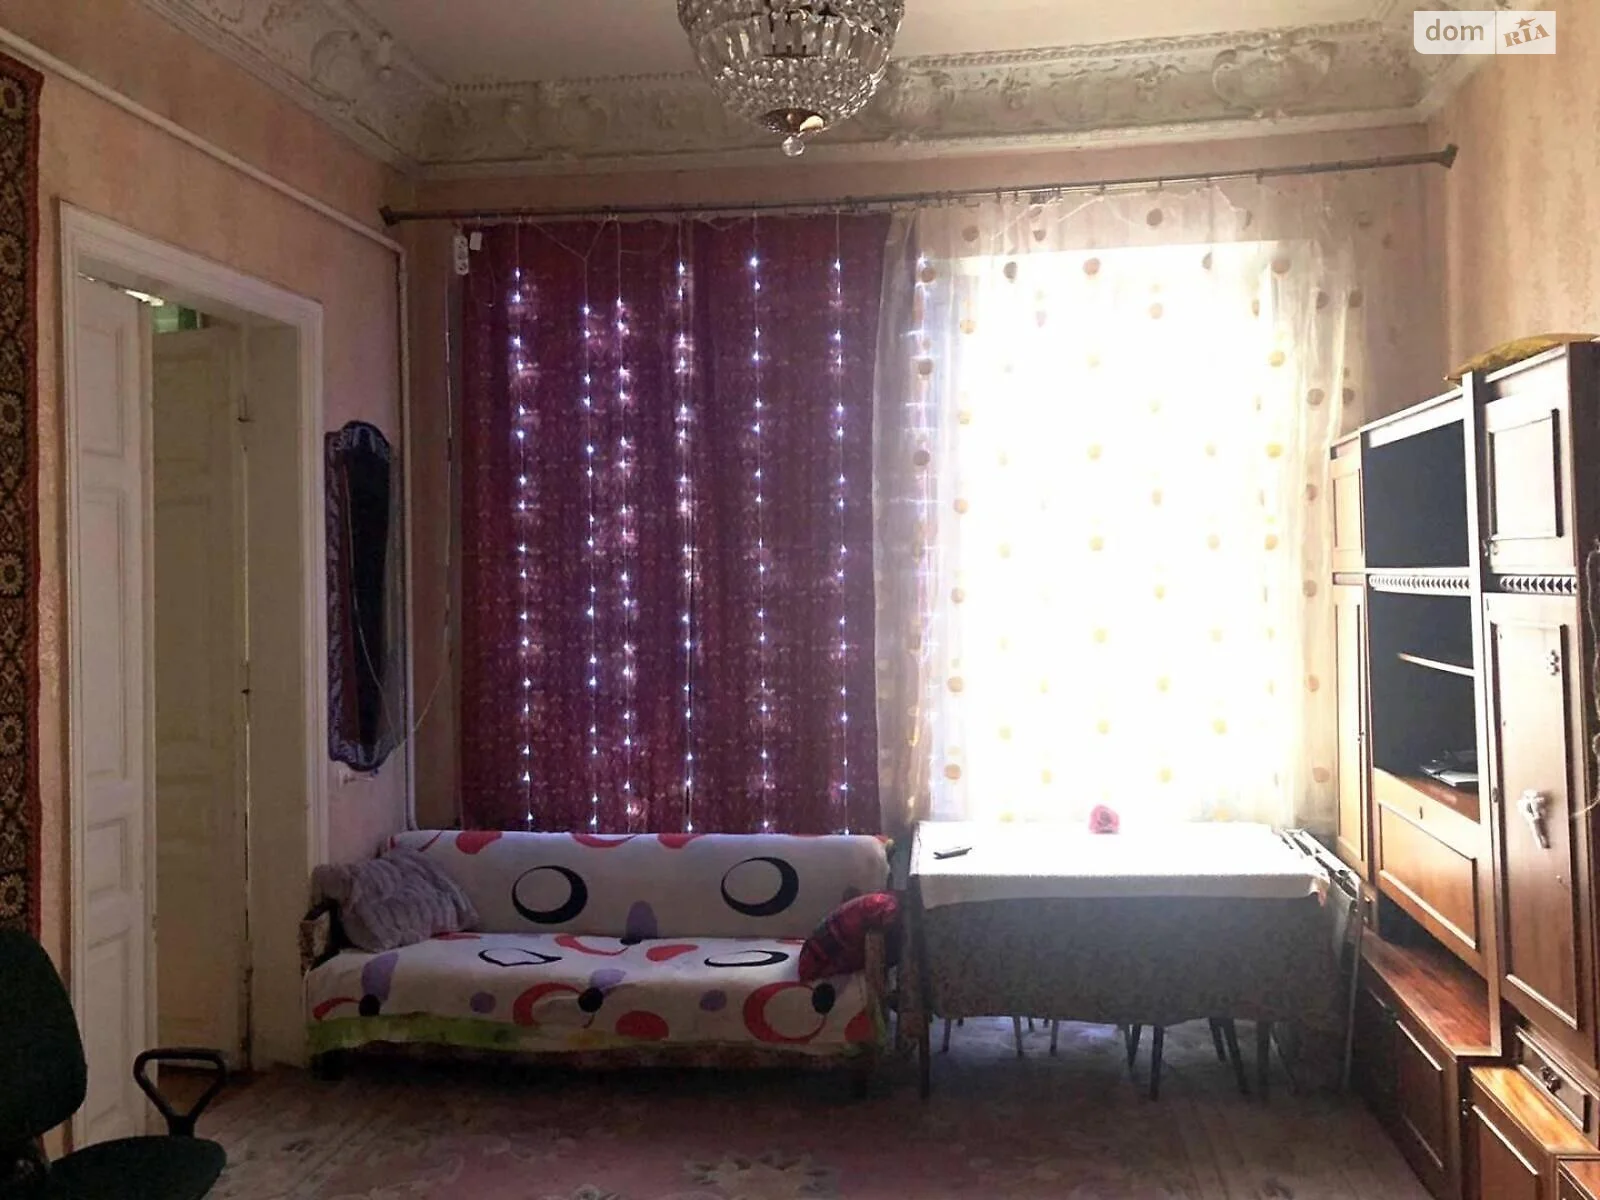 Продается комната 62 кв. м в Одессе, цена: 40000 $ - фото 1